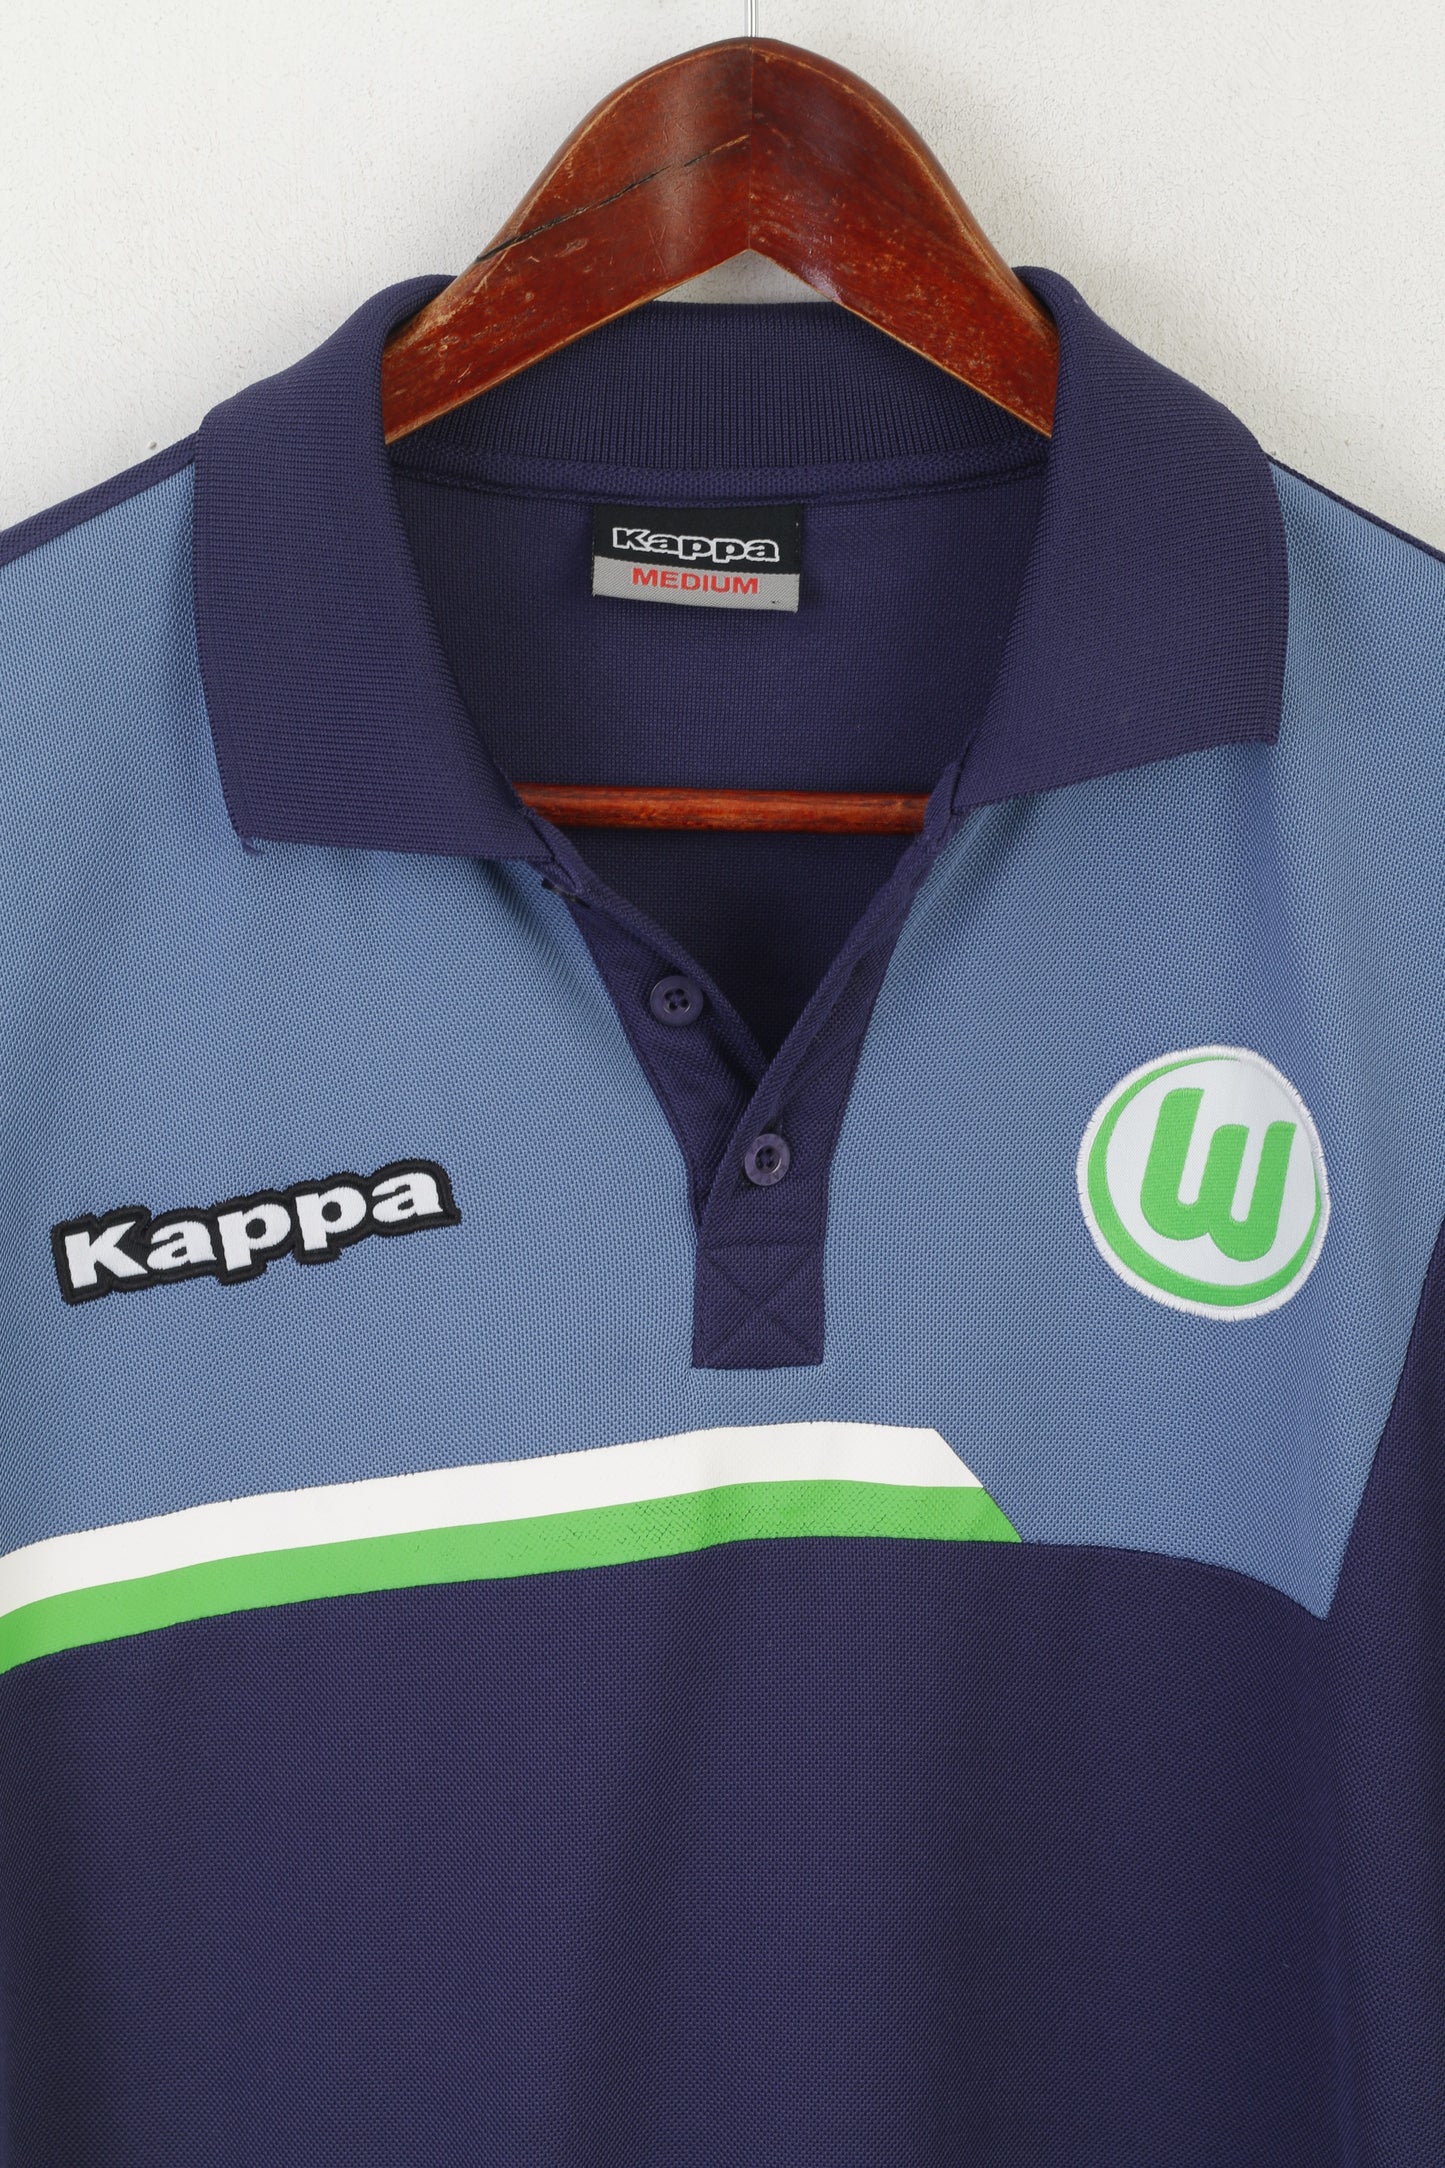 Kappa Homme M Polo Bleu Marine Brillant Vintage Tennis Sportswear Logo Jersey Top